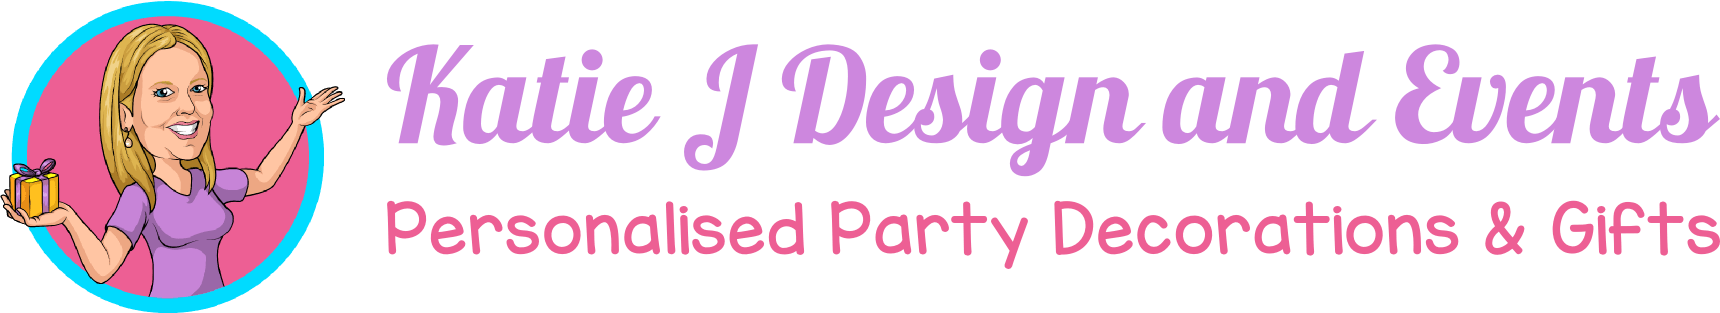 Transform Events with Custom Logo Decor from Katie J Design! - Katie J ...